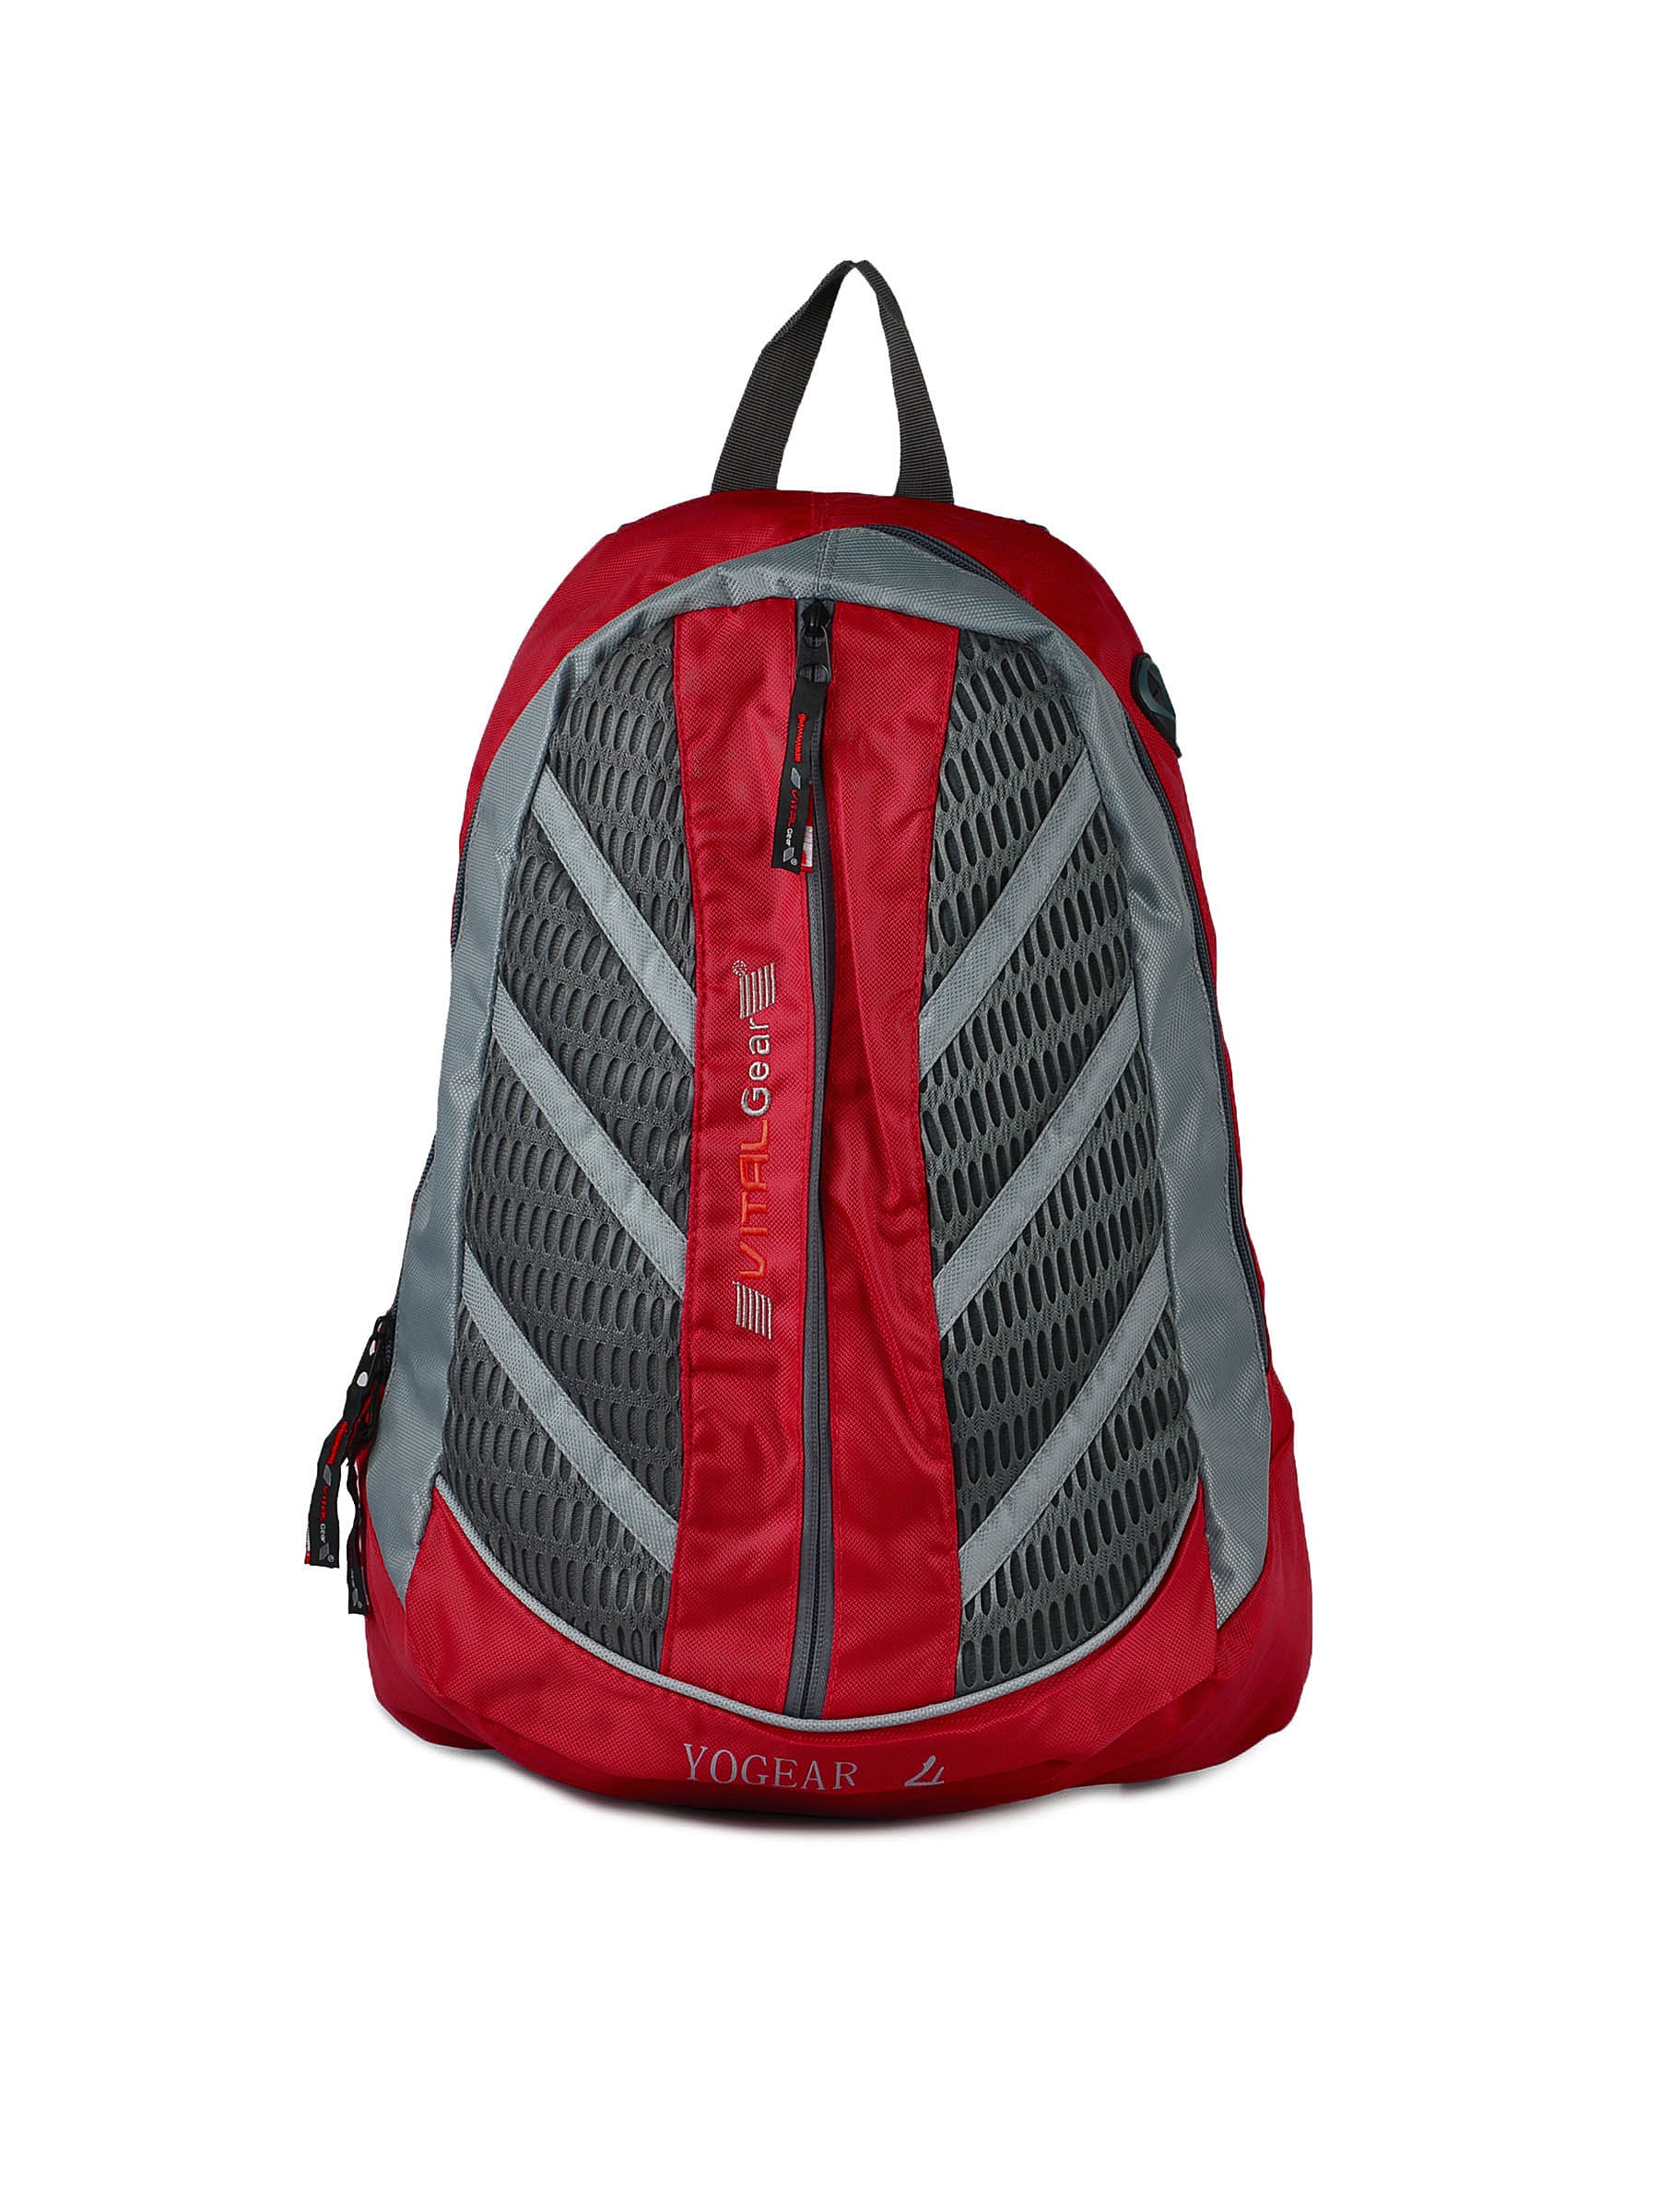 Vital Gear Unisex Red Daypack Backpack